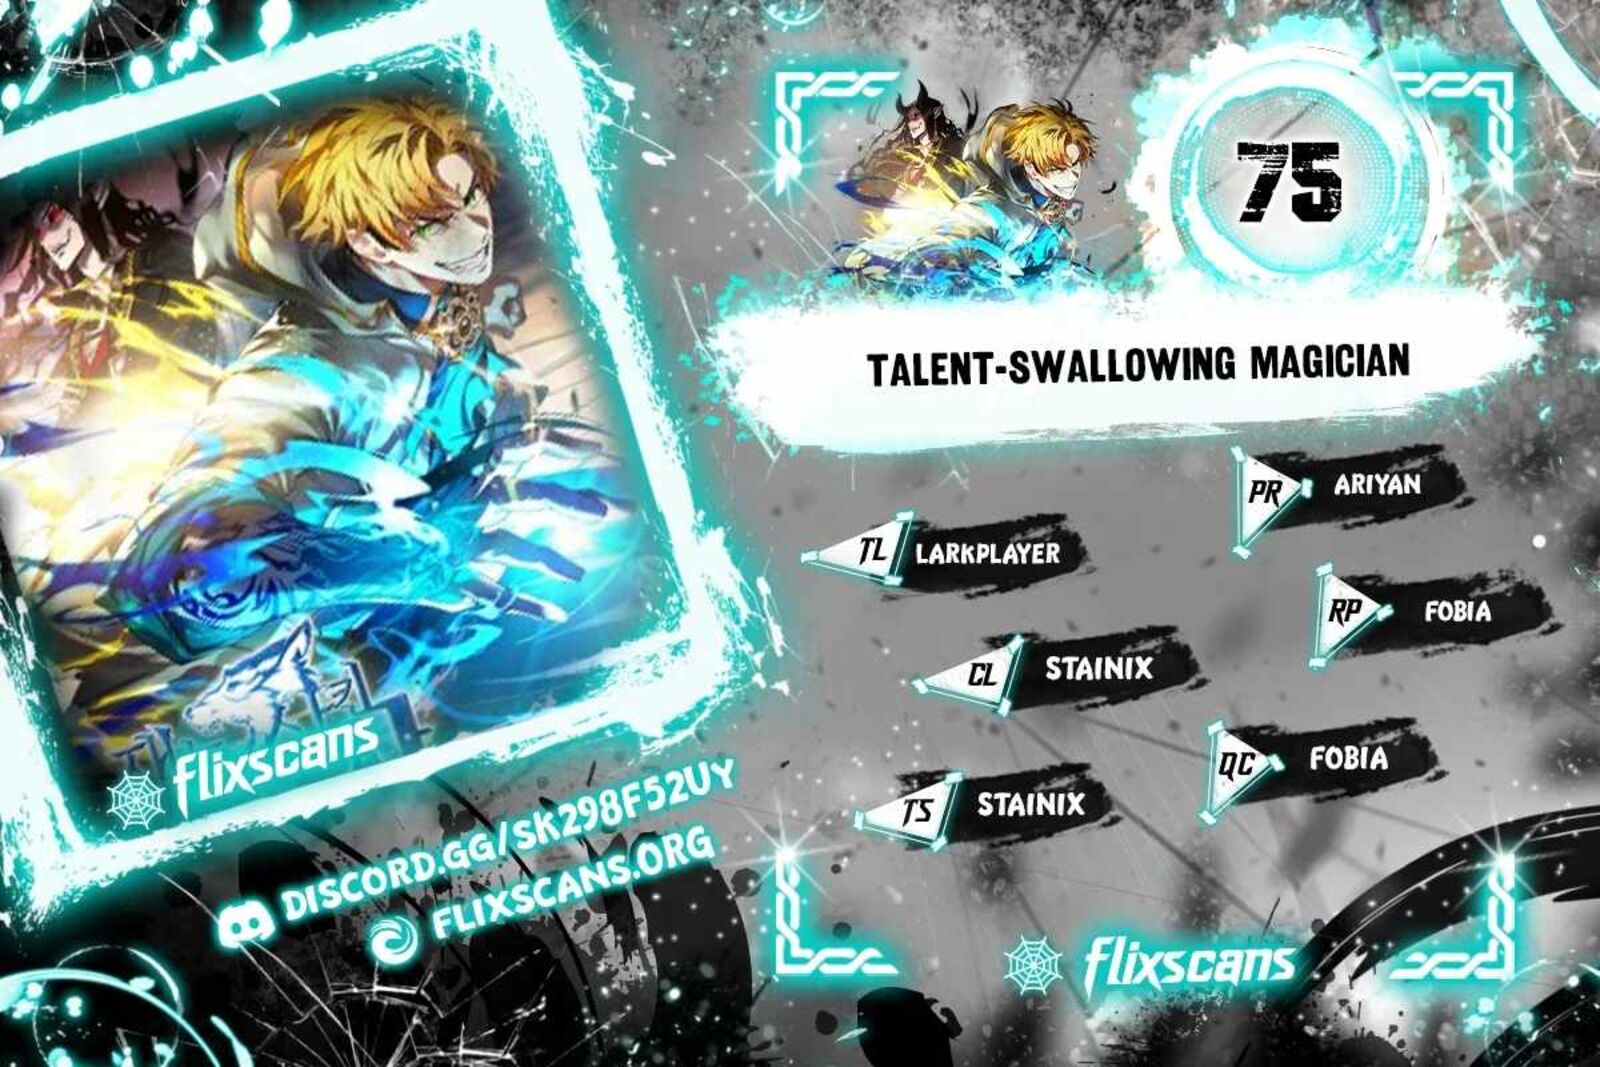 Talent Swallowing Magician 75 3